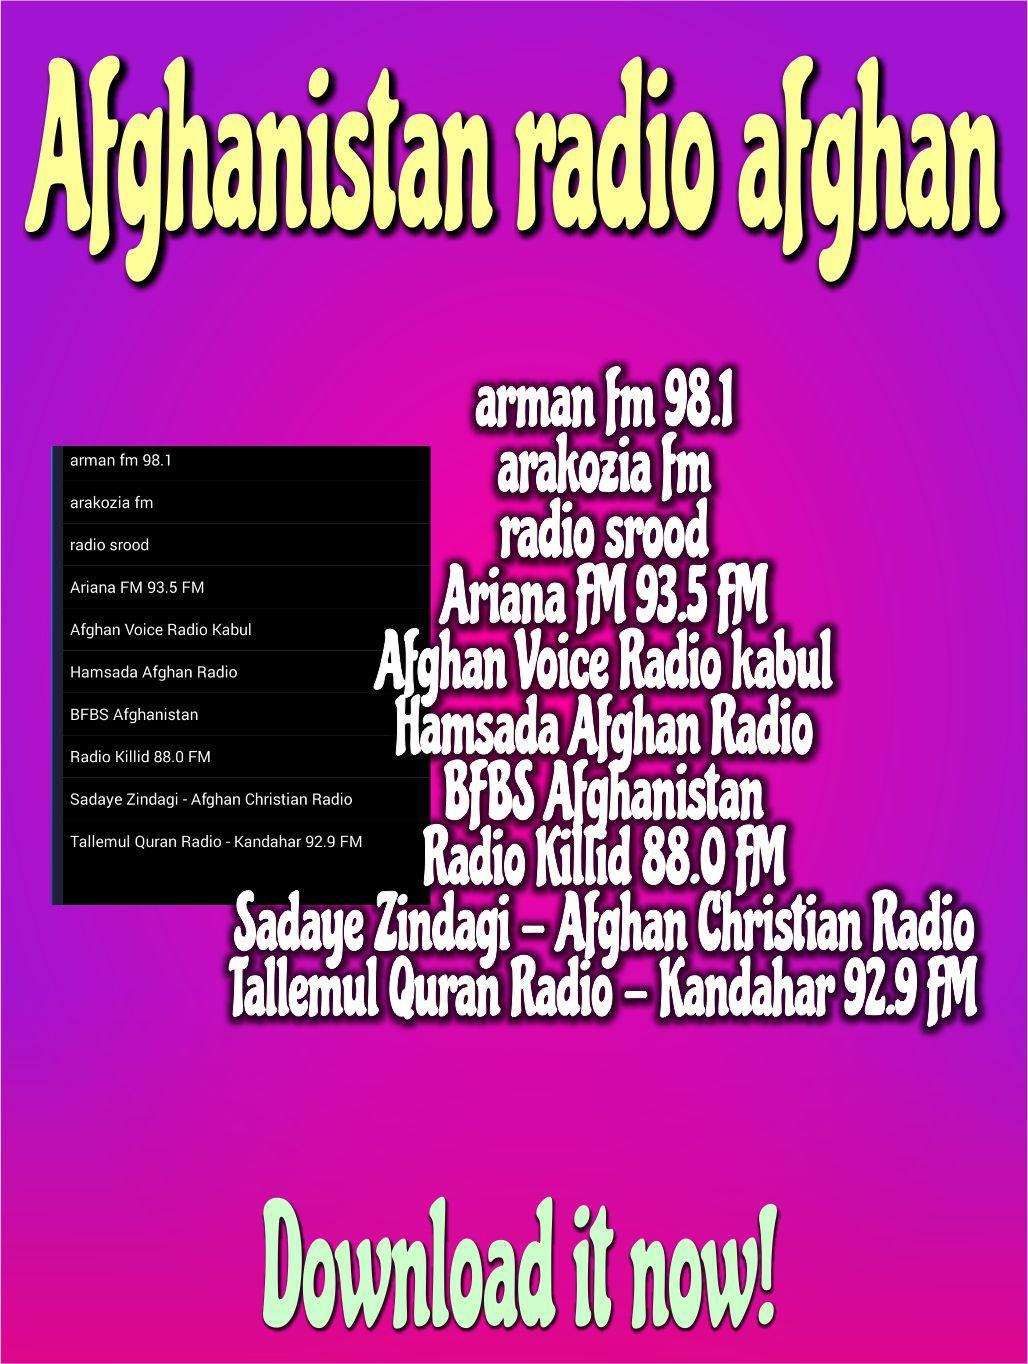 Afghanistan radio afghan安卓版应用APK下载